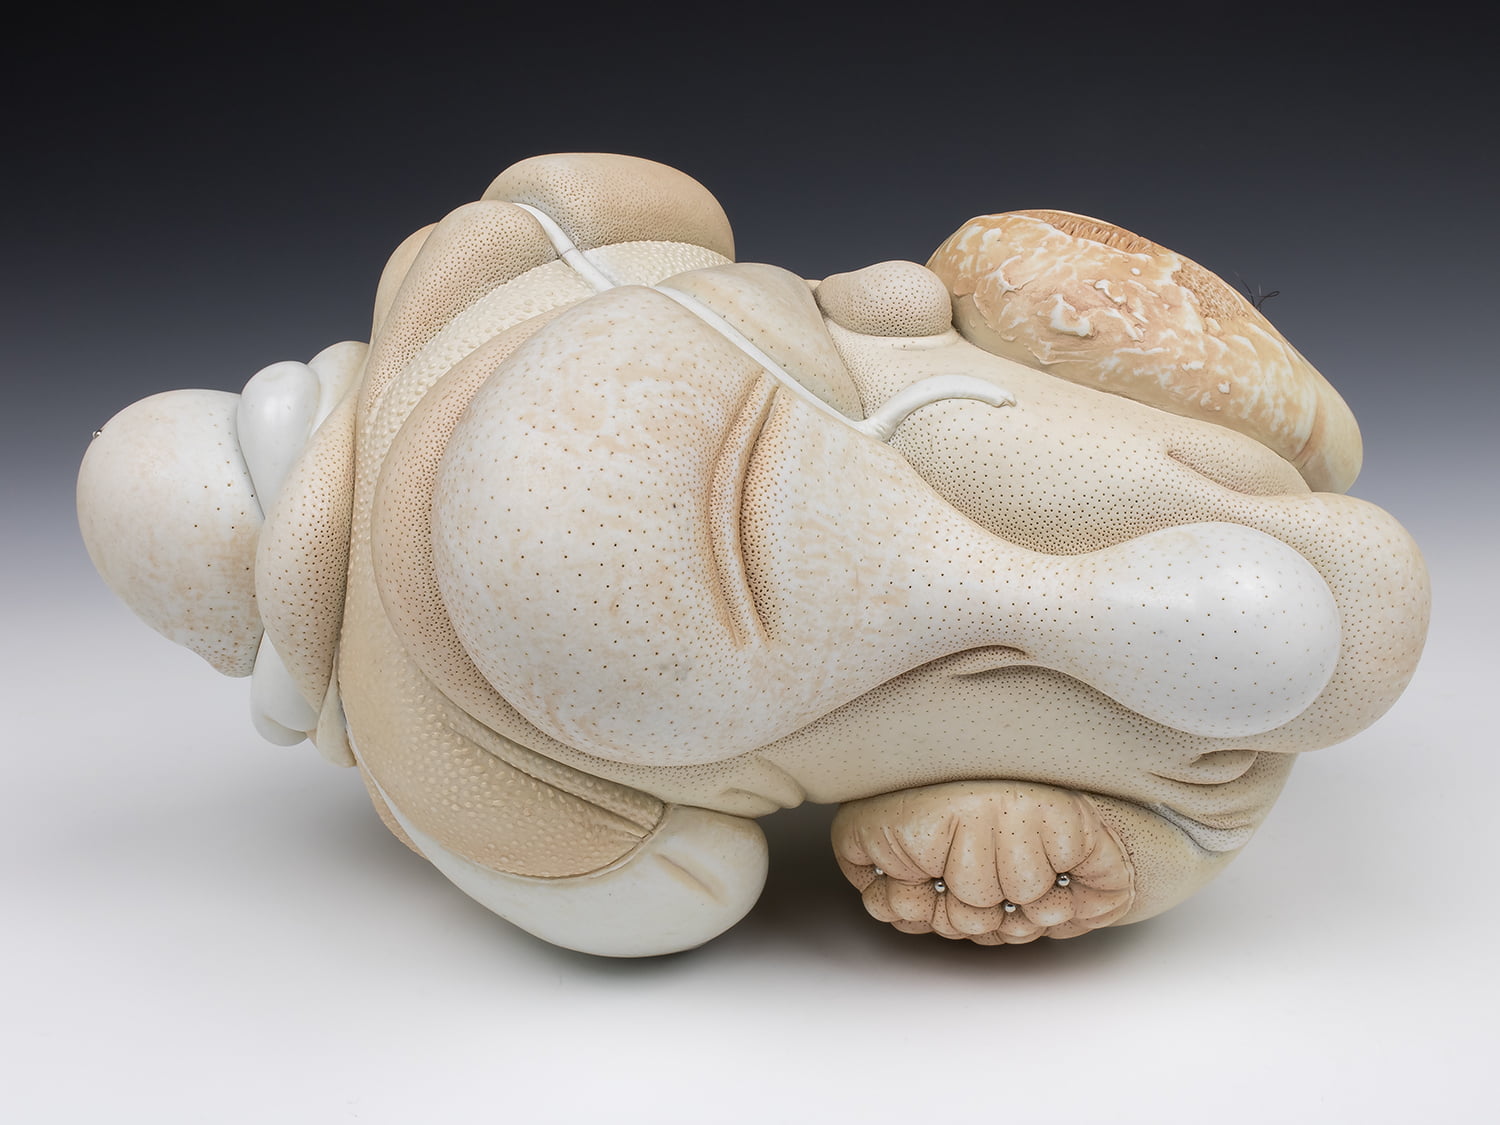 Jason Briggs "Suave" (alternate view). porcelain, hair, and mixed media sculpture ceramics.